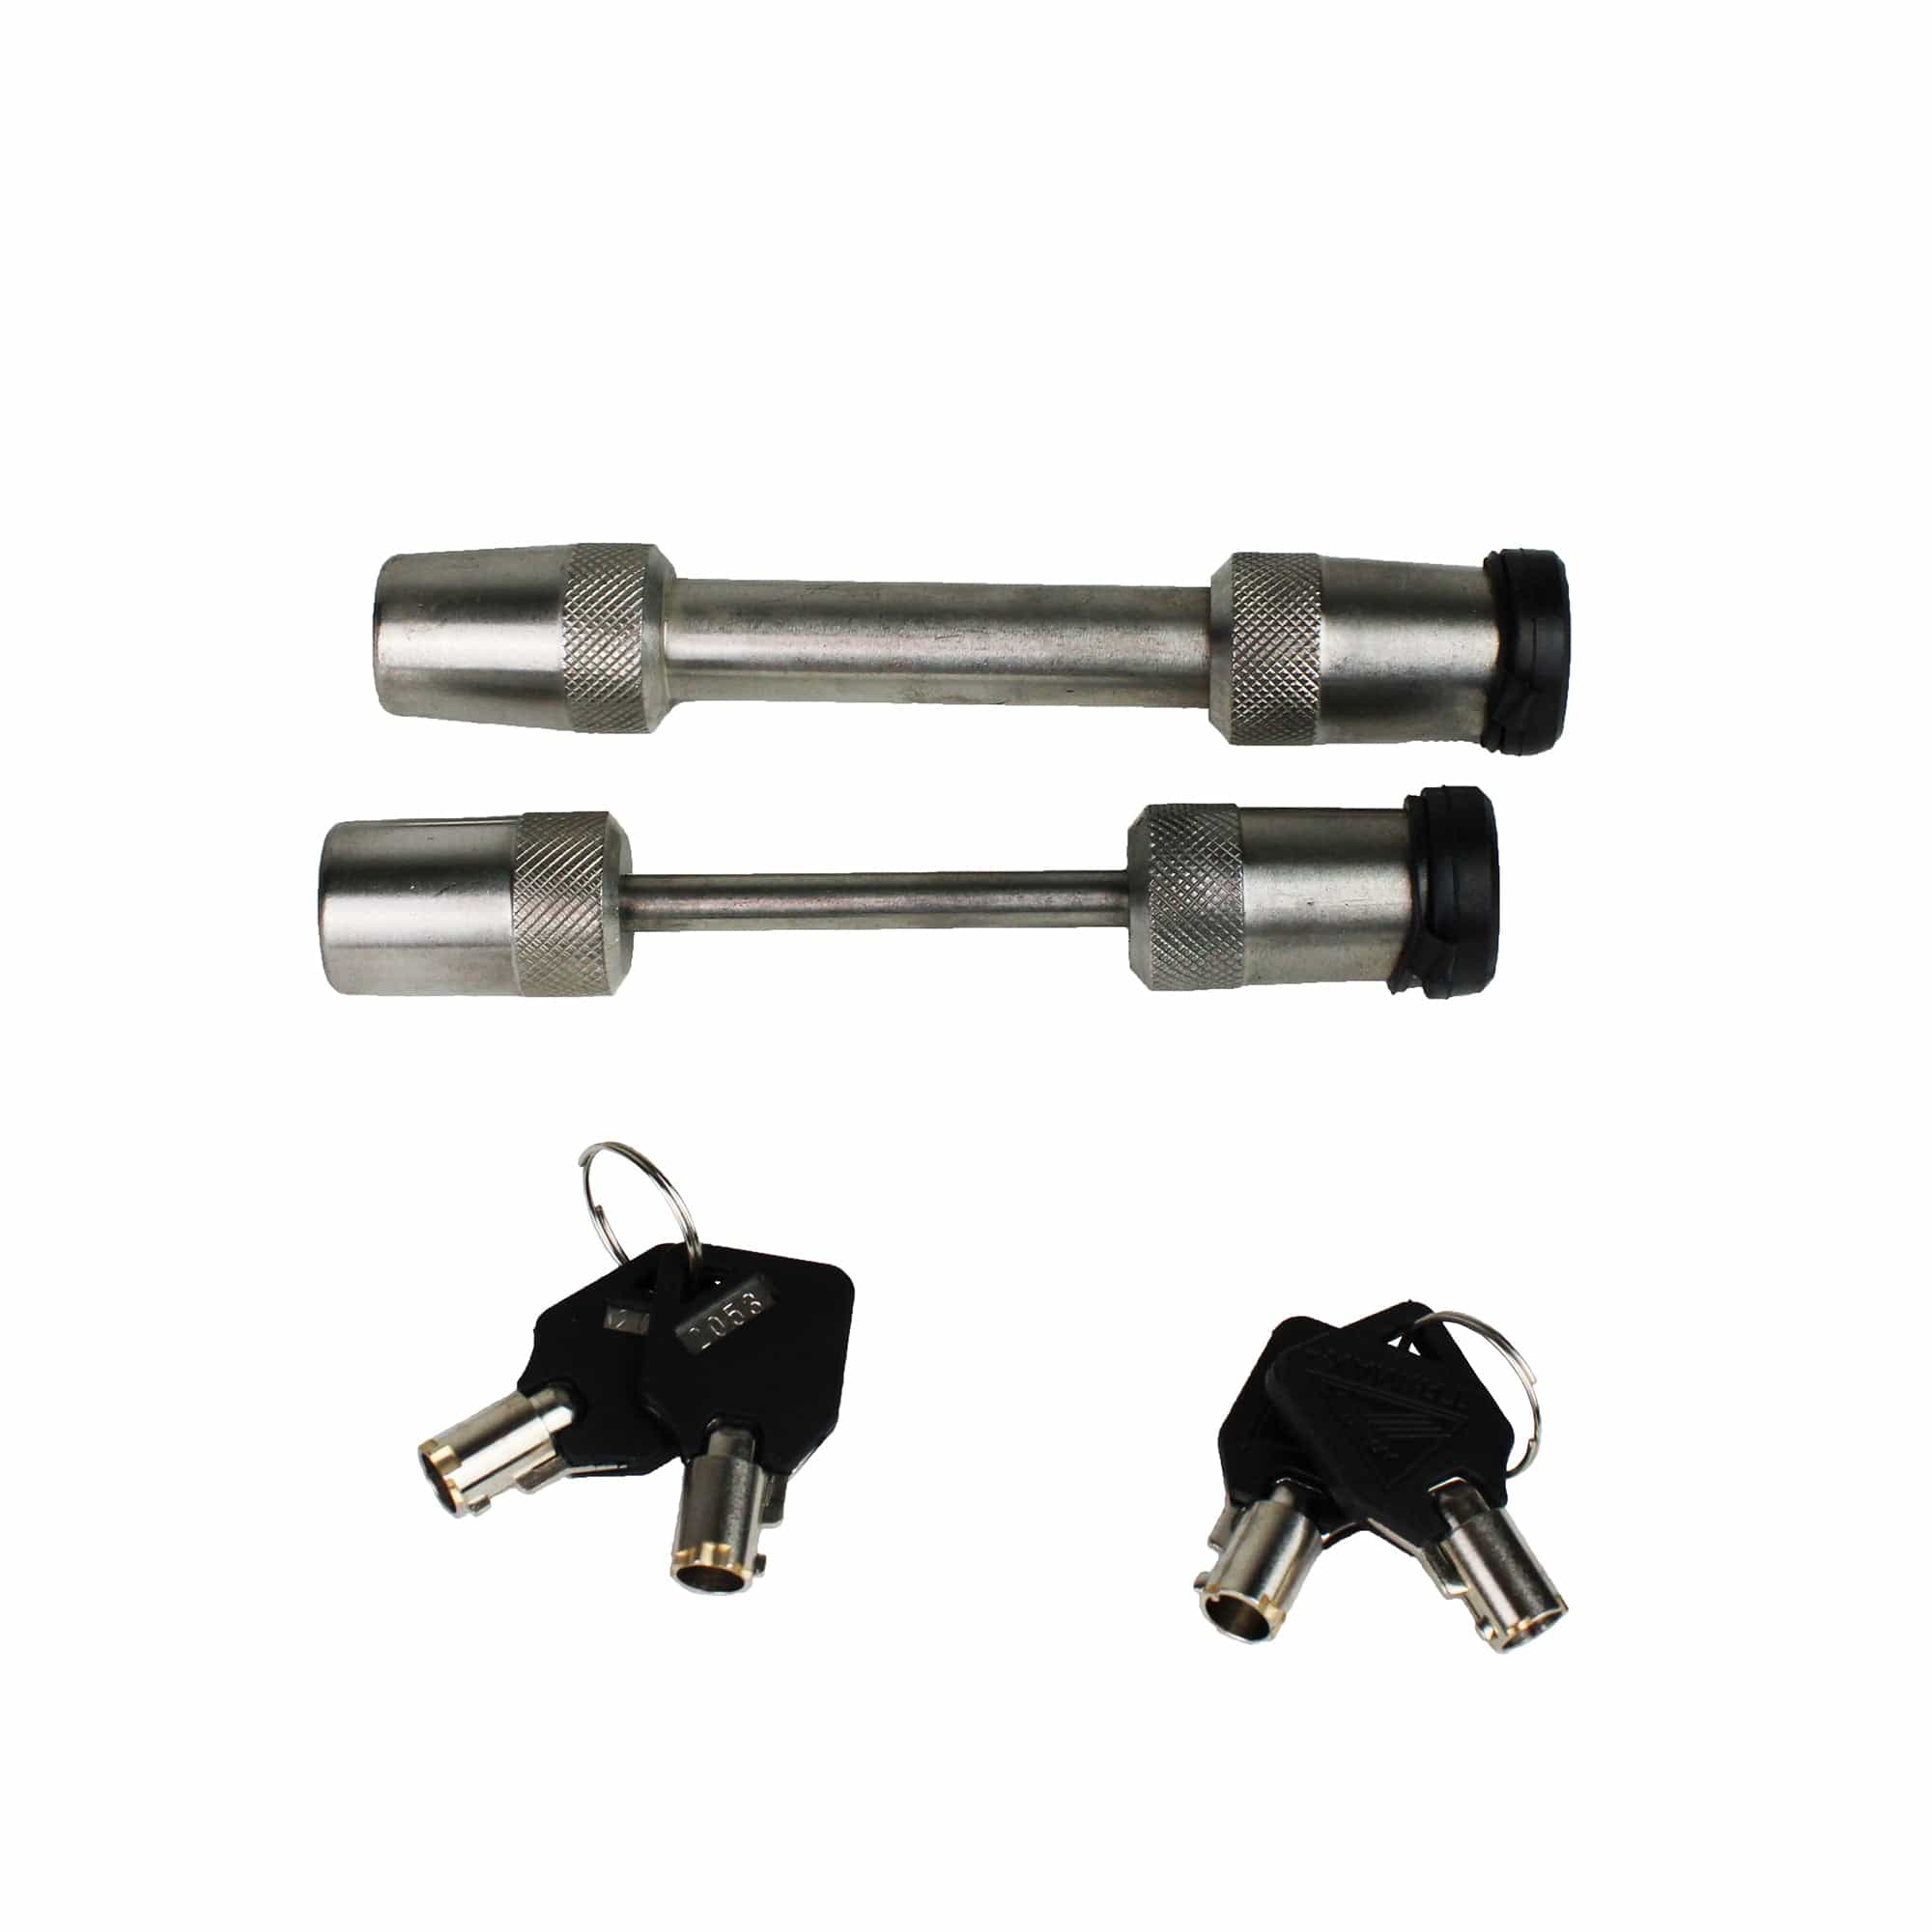 Trimax SXTM32 5/8" Stainless Steel Receiver & TC2 2-1/2" Span Coupler Lock Set